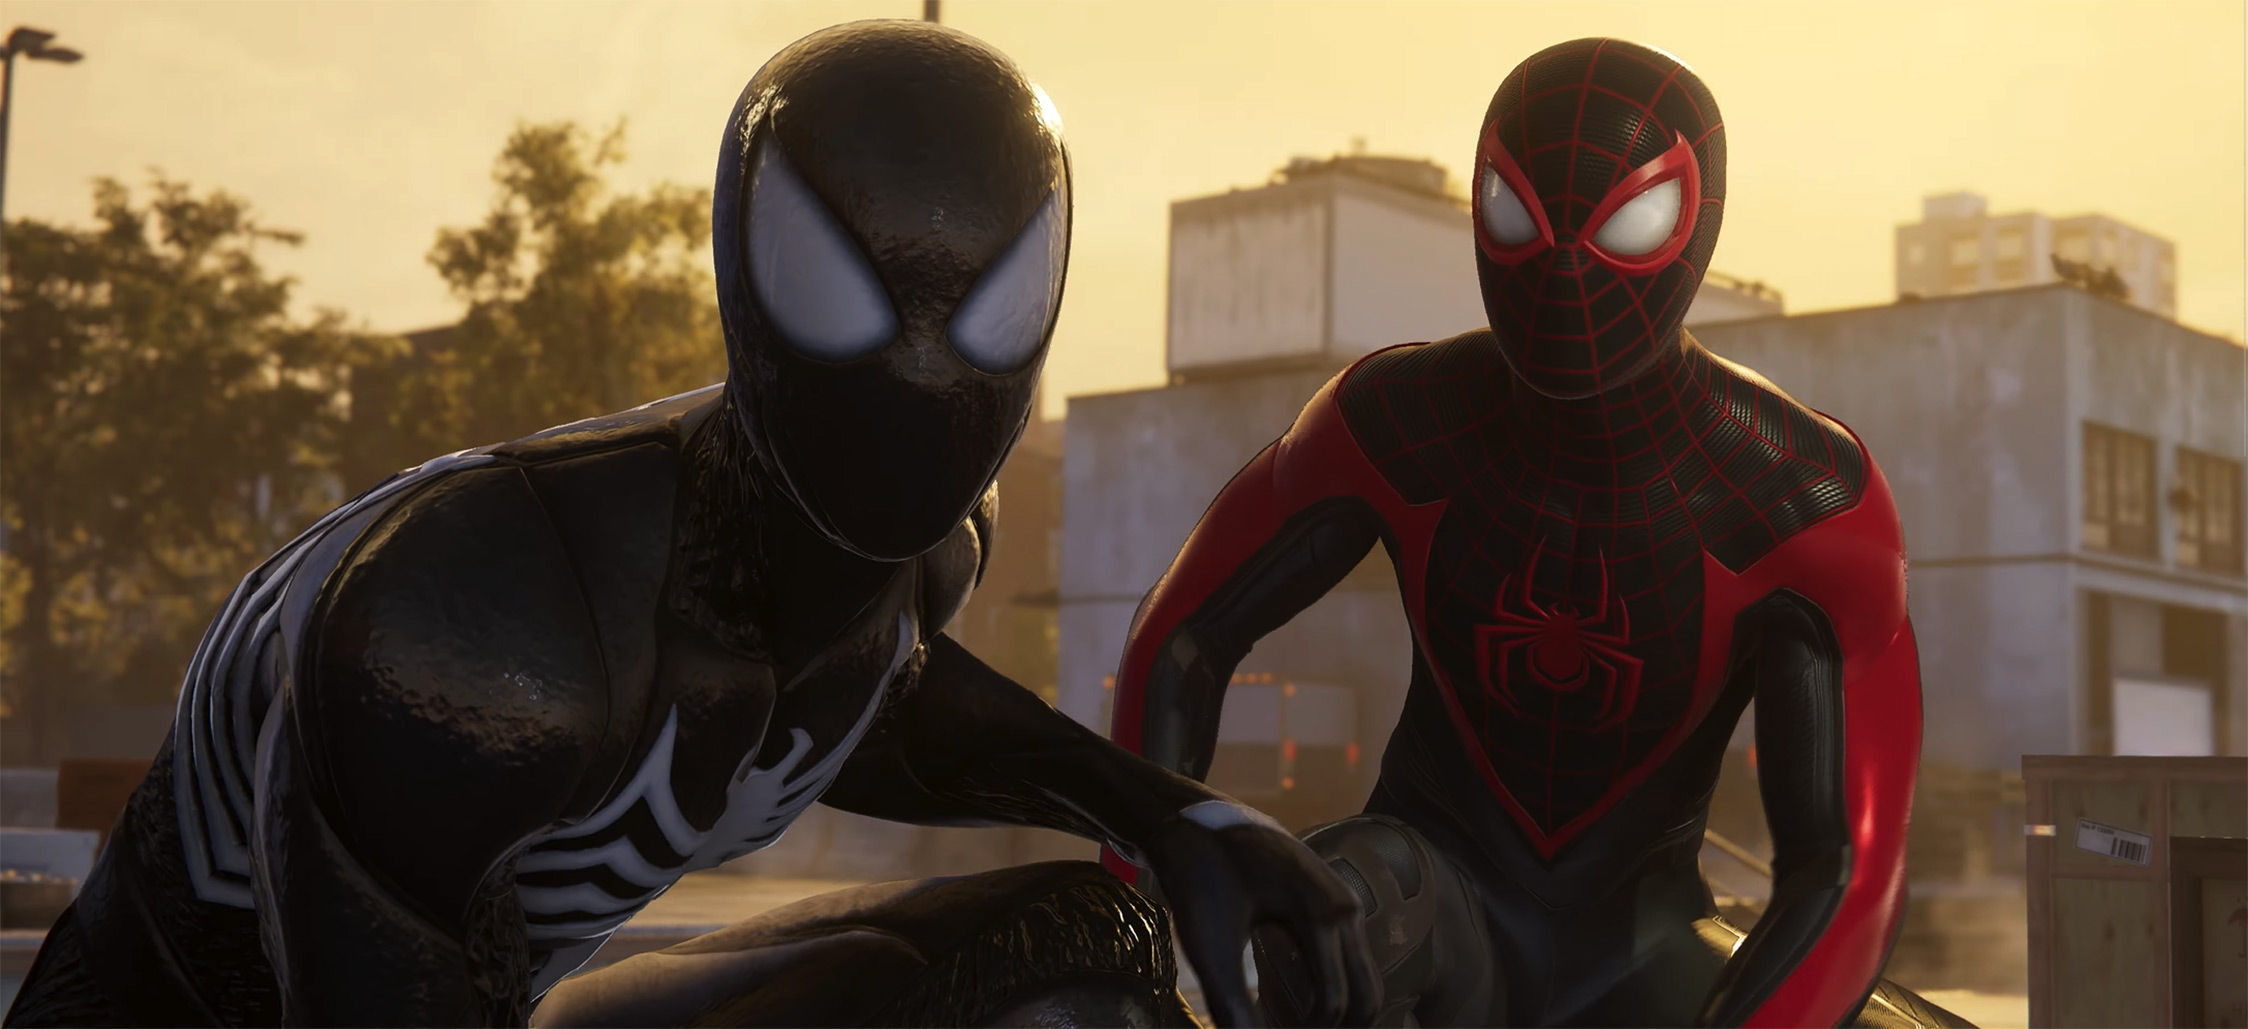 Morales and Parker put the '2' in Marvel Spider-Man 2 - JB Hi-Fi